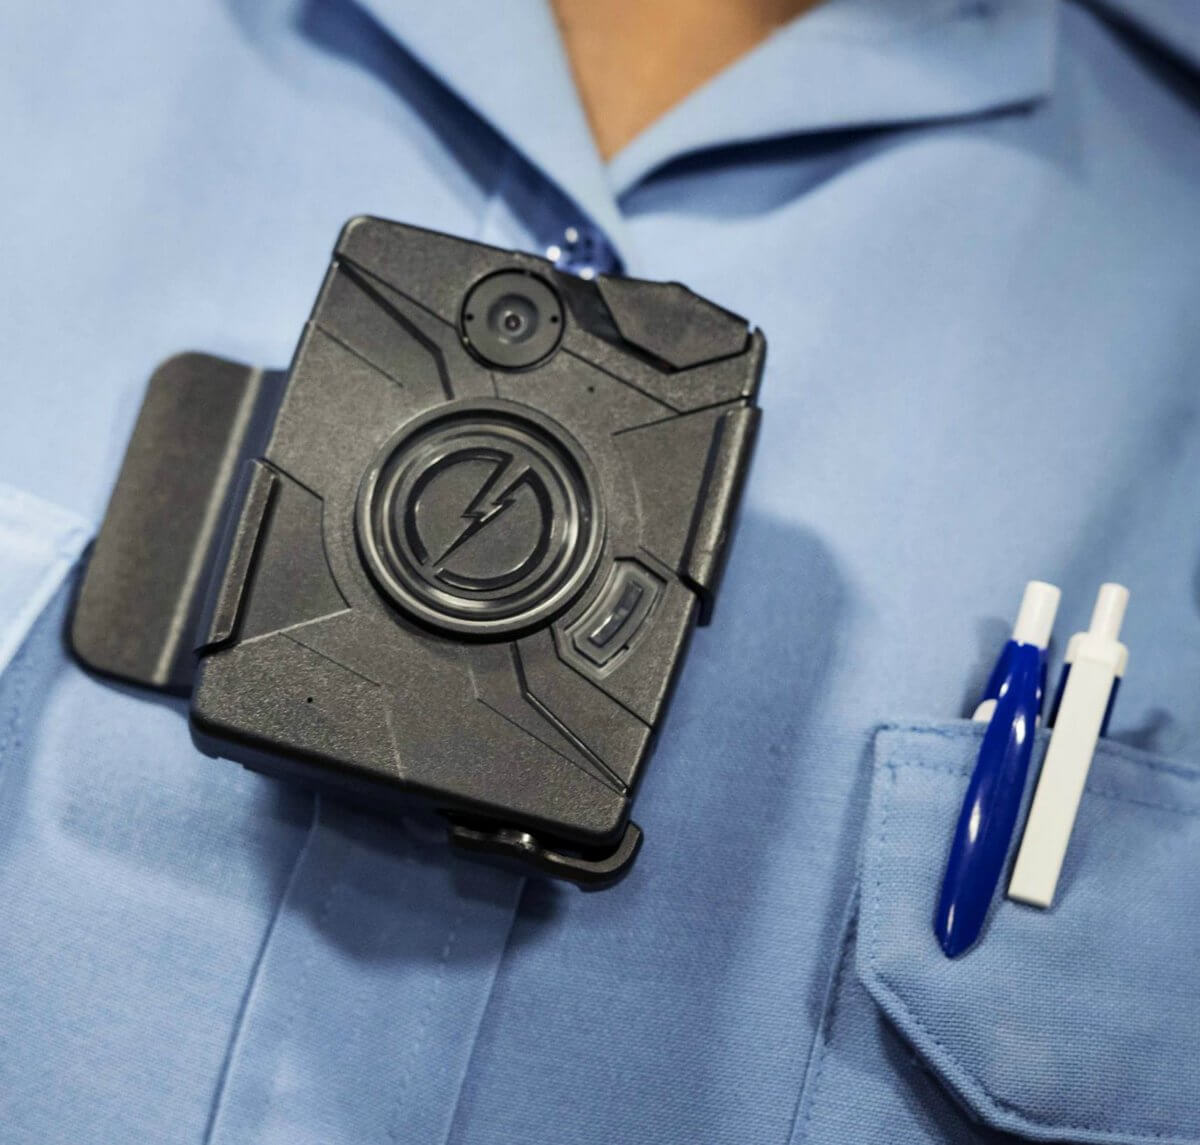 Glassboro cops go active with body cameras program